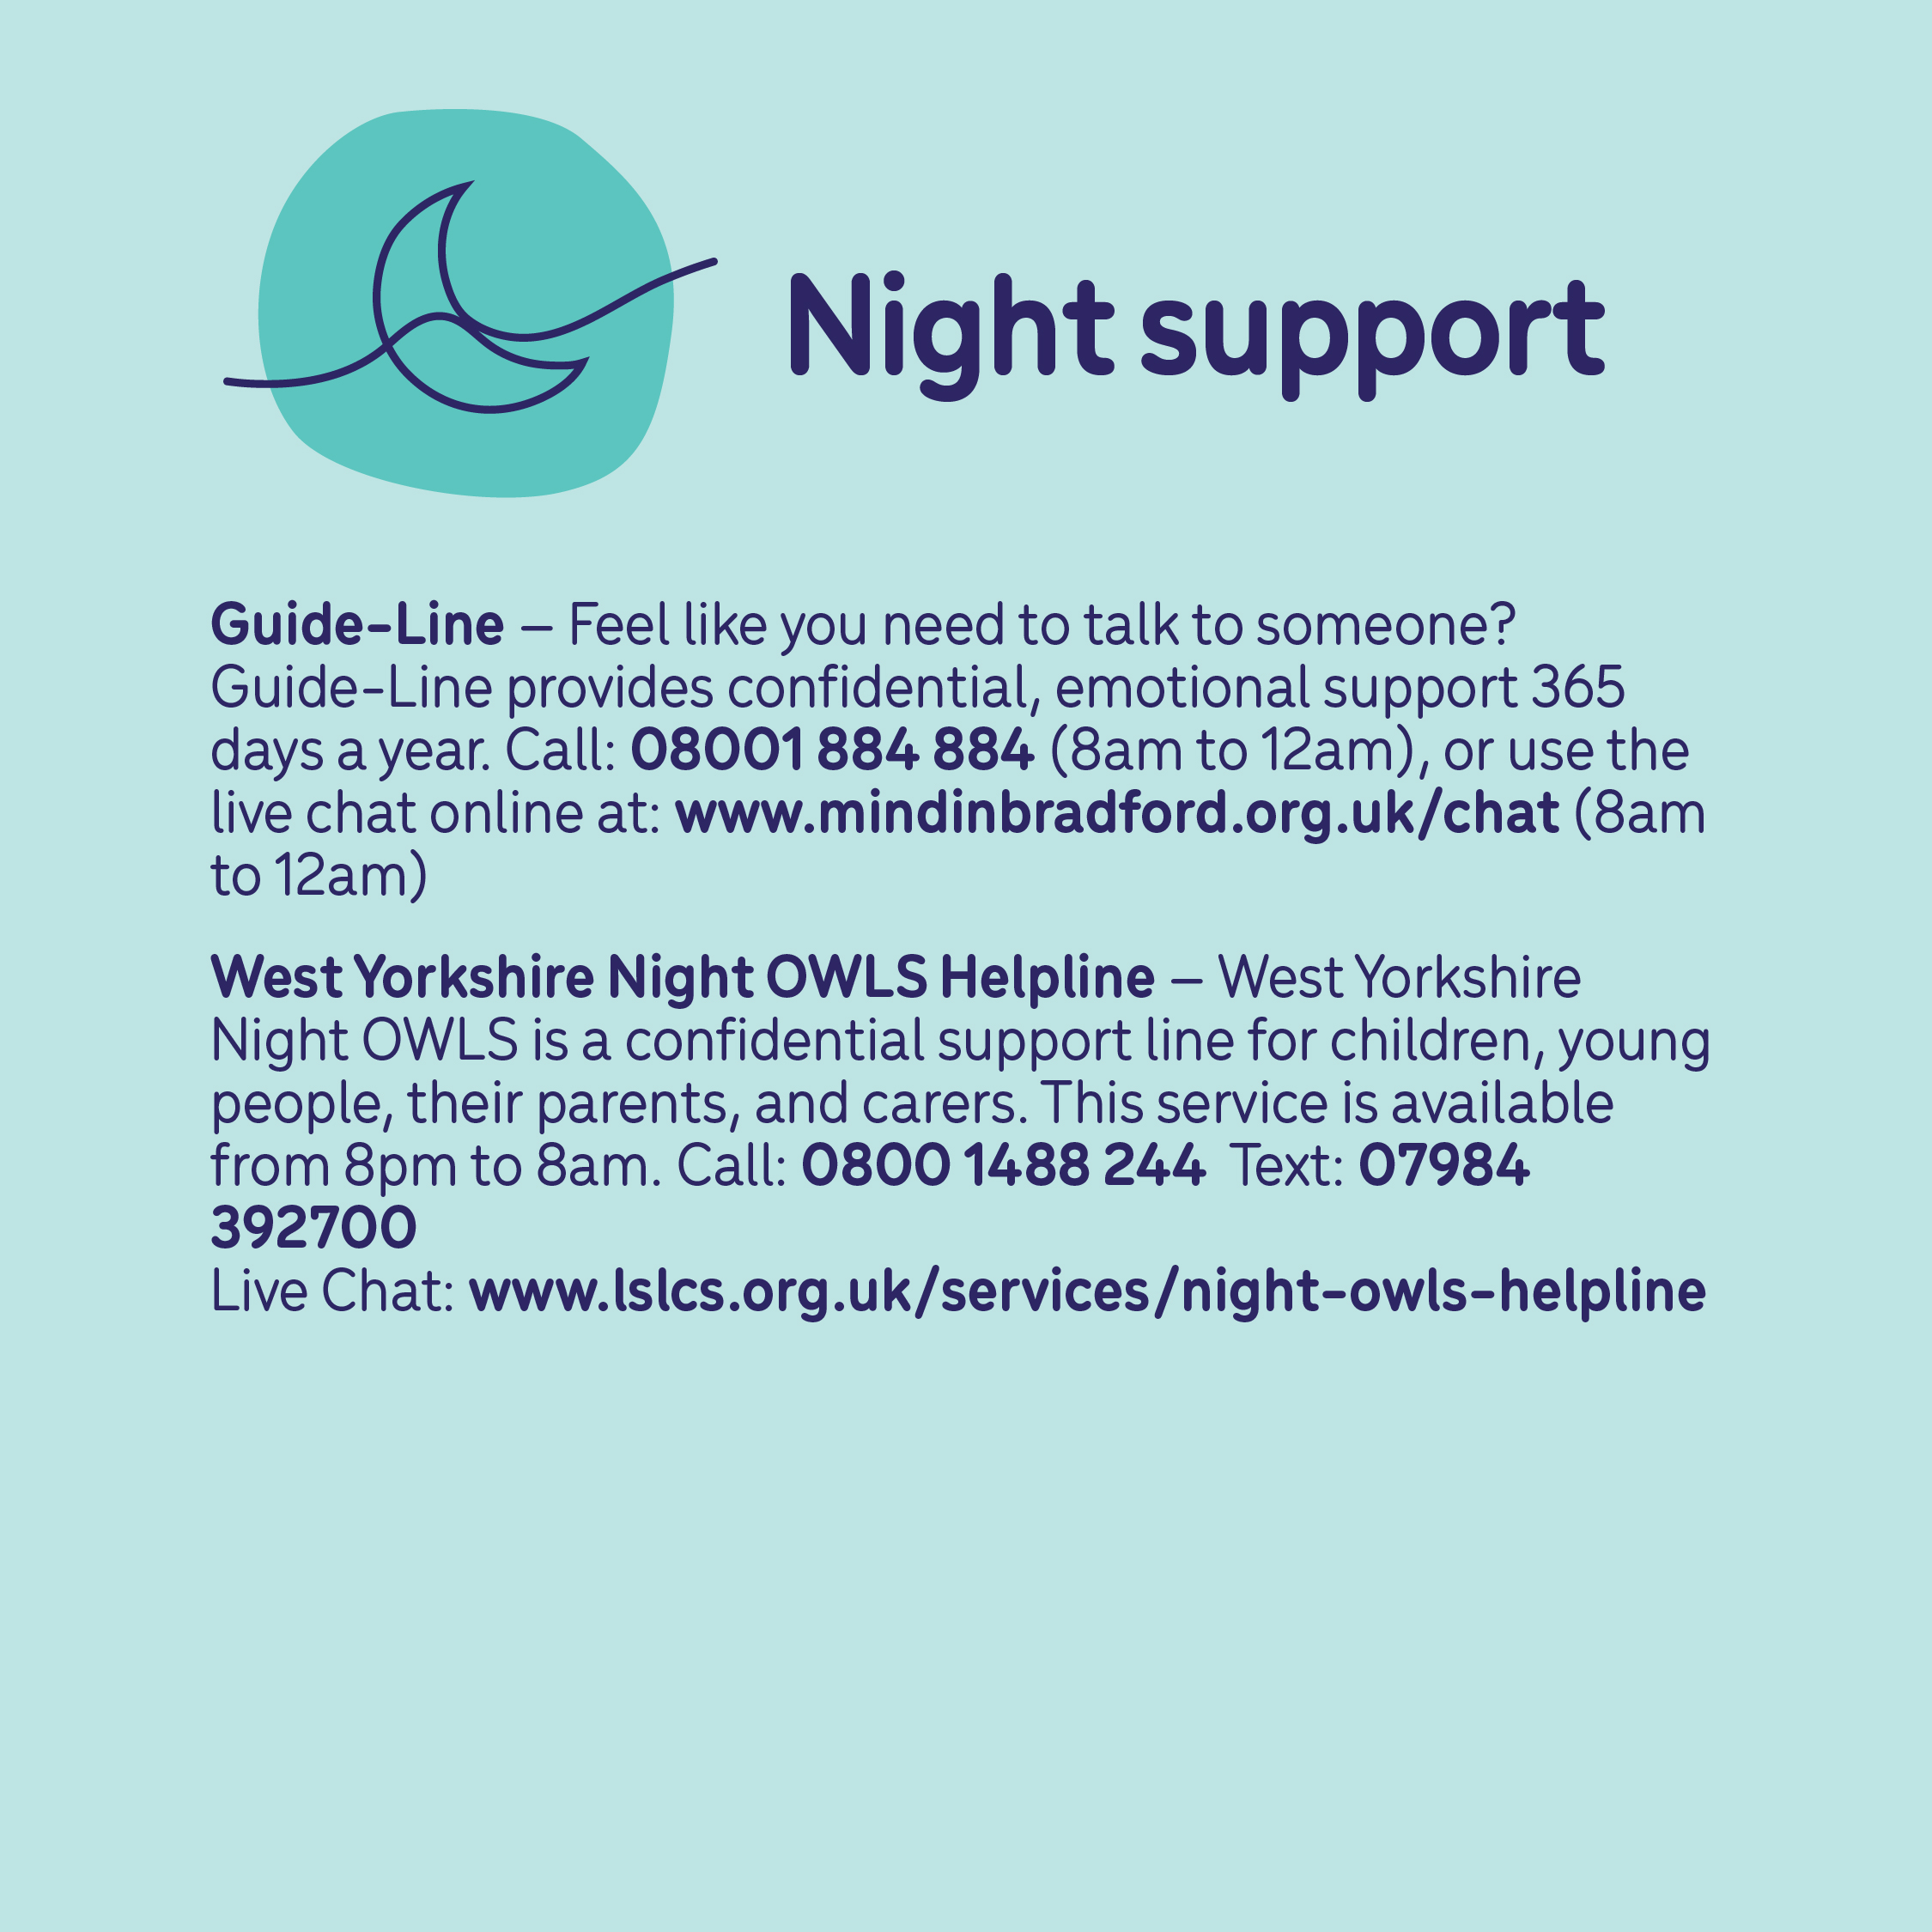 Night support